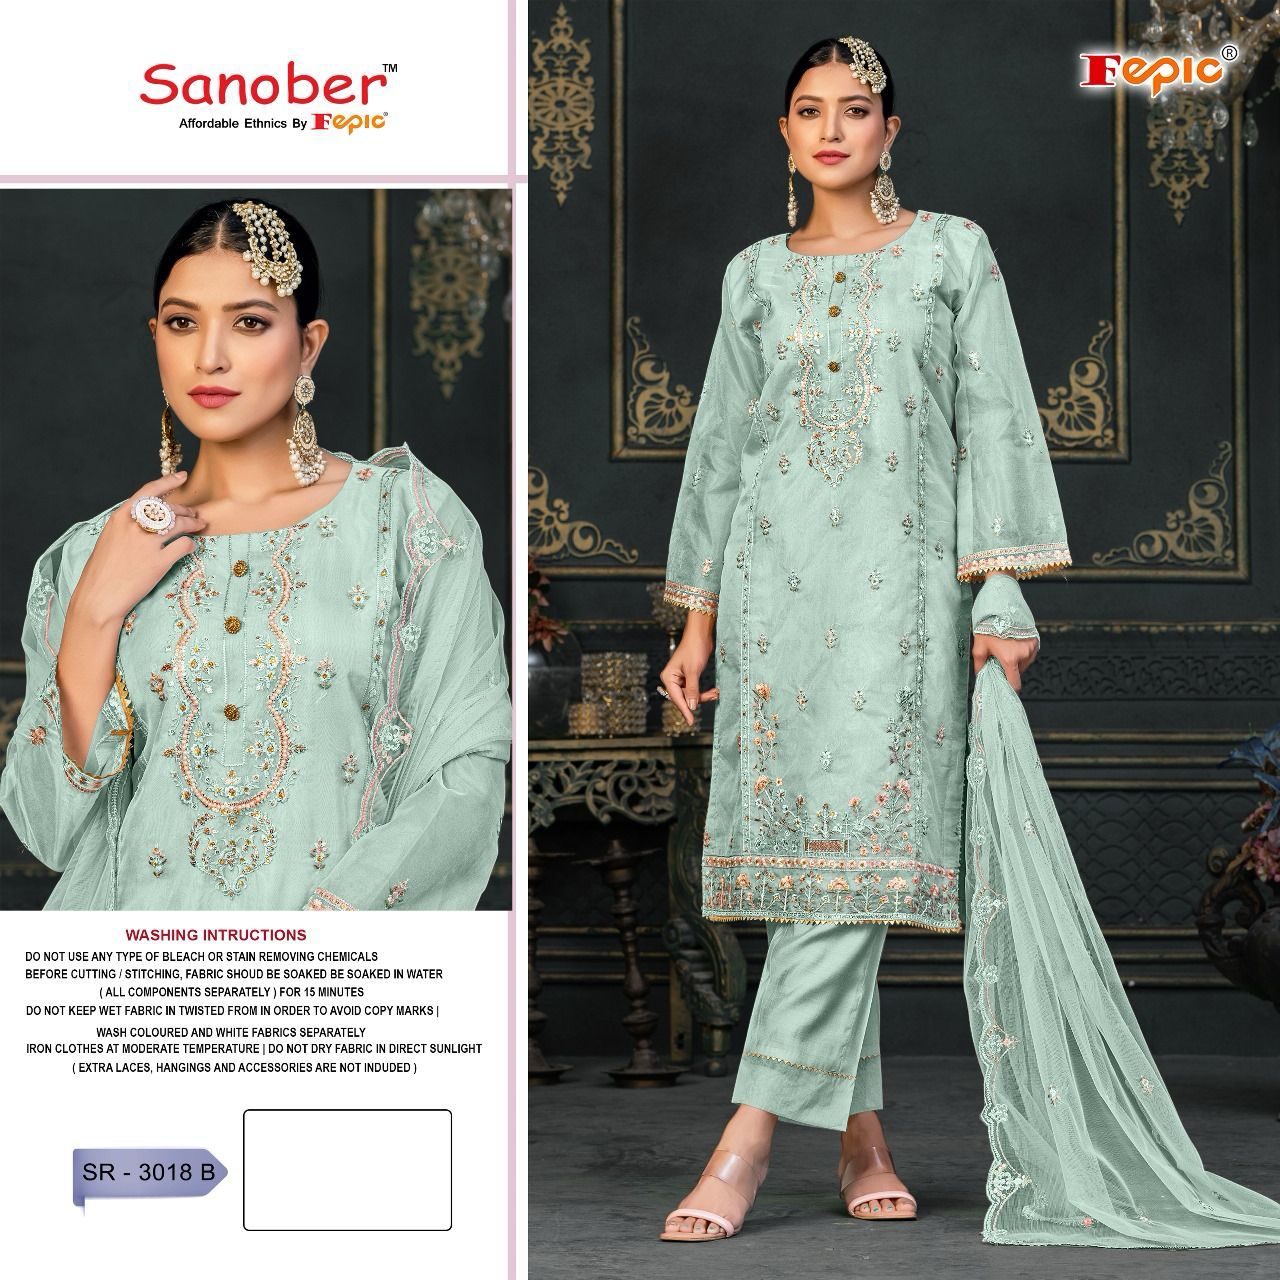 Sr 3018 Sanober Fepic Organza Pakistani Readymade Suits